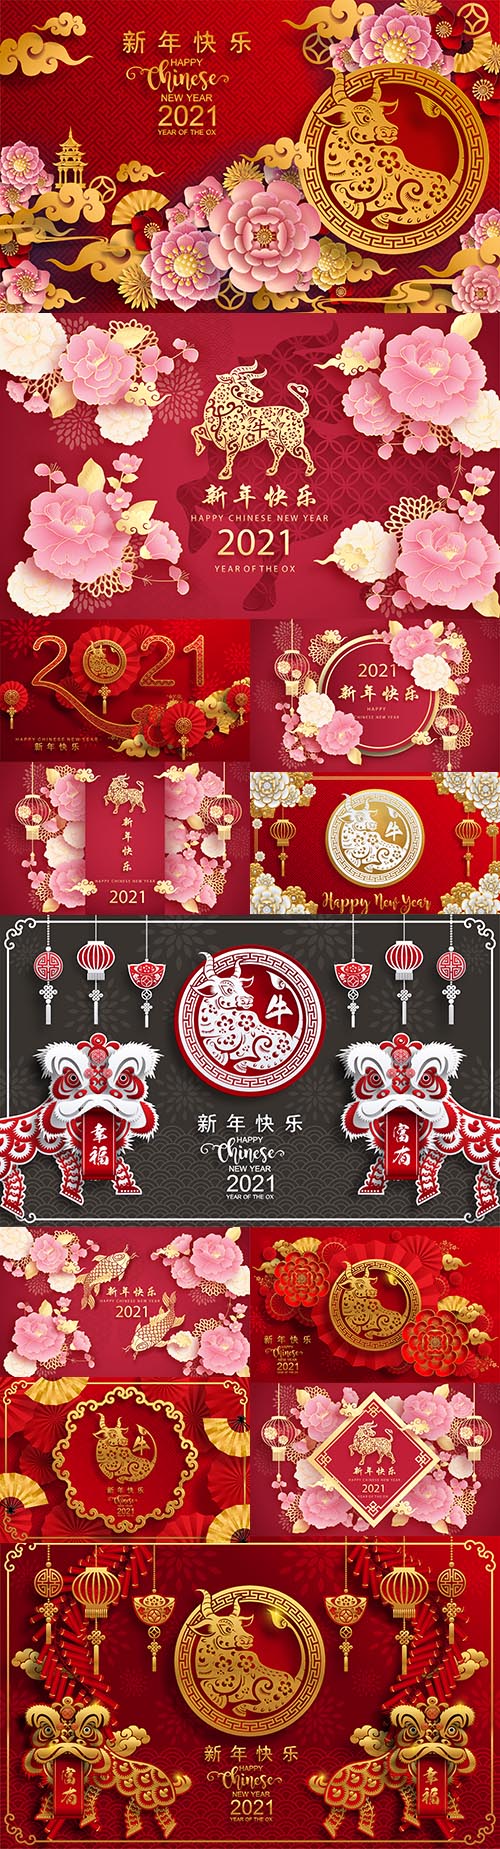 Happy Chinese New Year 2021 bright decorative design
